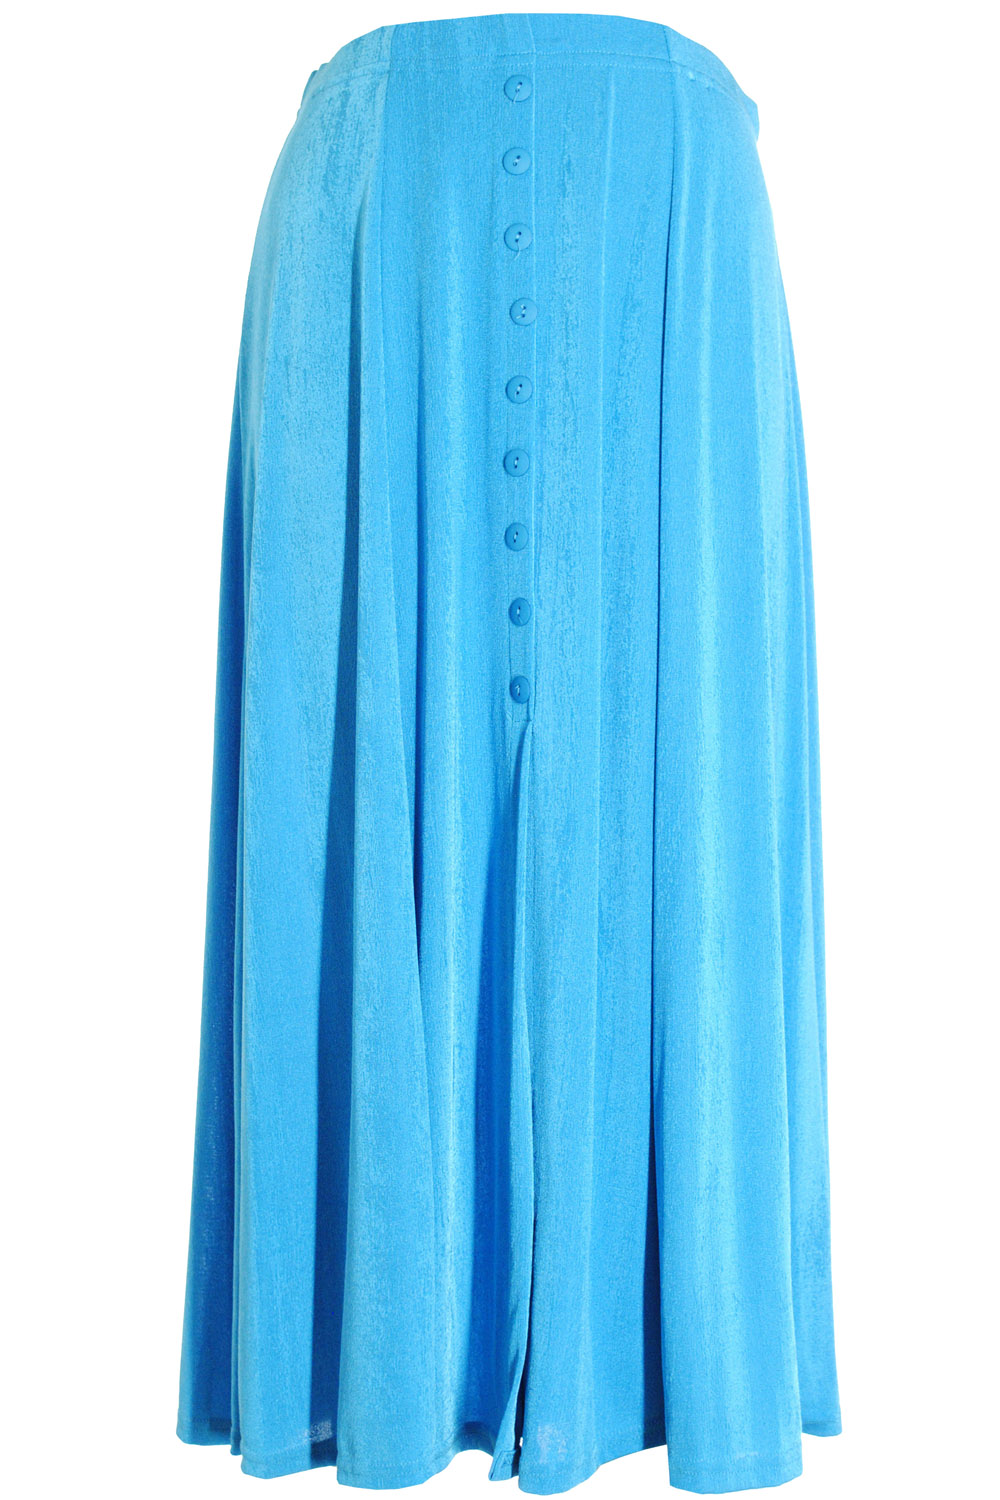 Jostar Stretchy Button Skirt, 600BN - Jostar Online